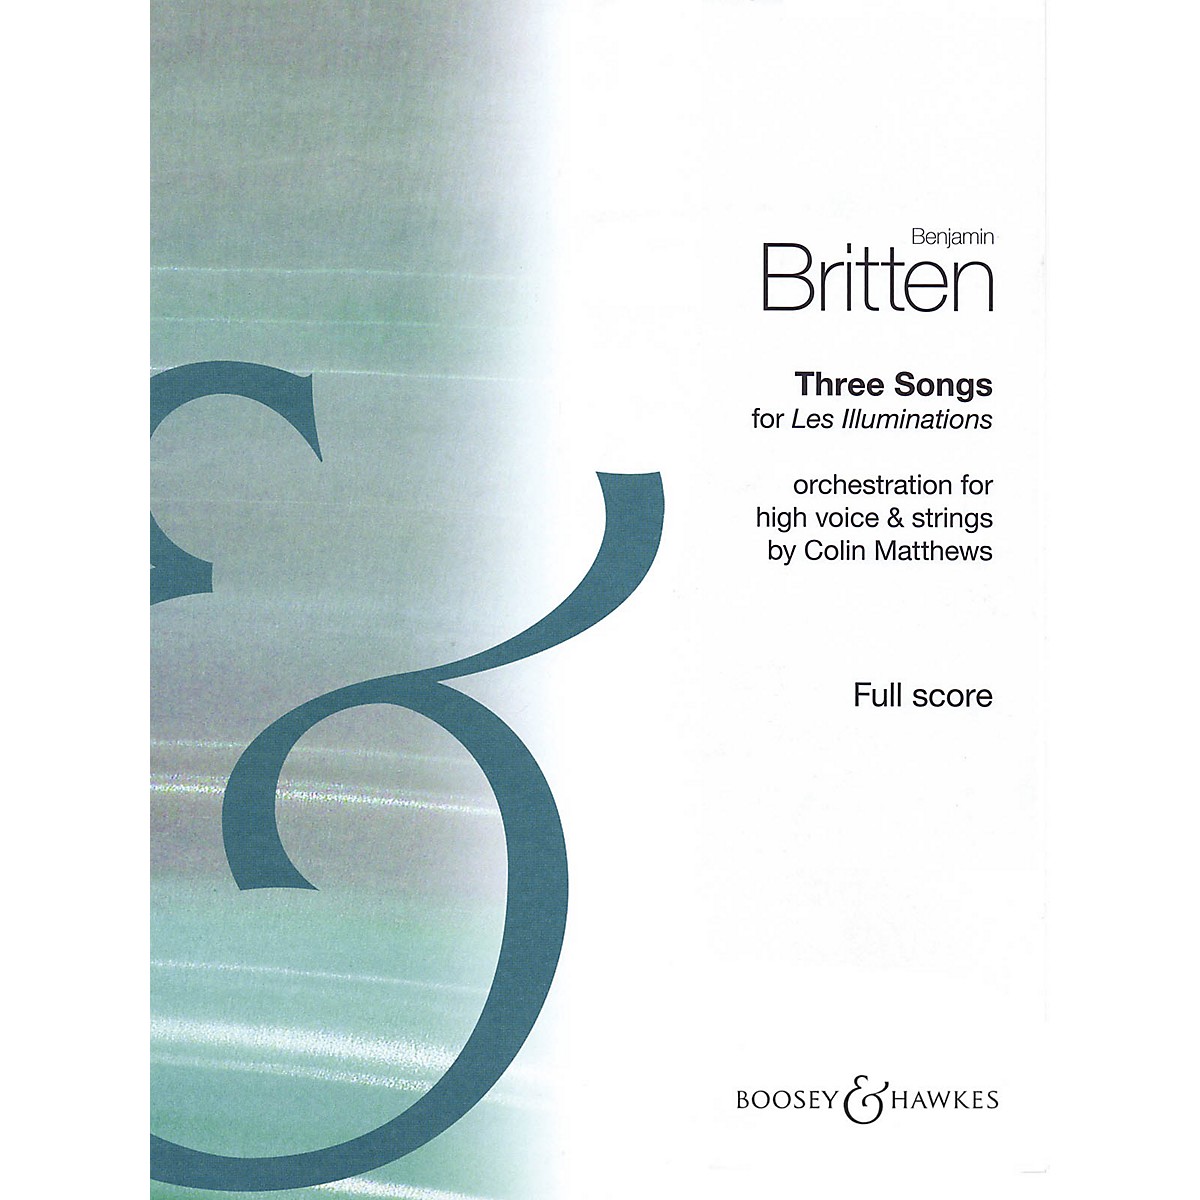 Britten les illuminations score pdf